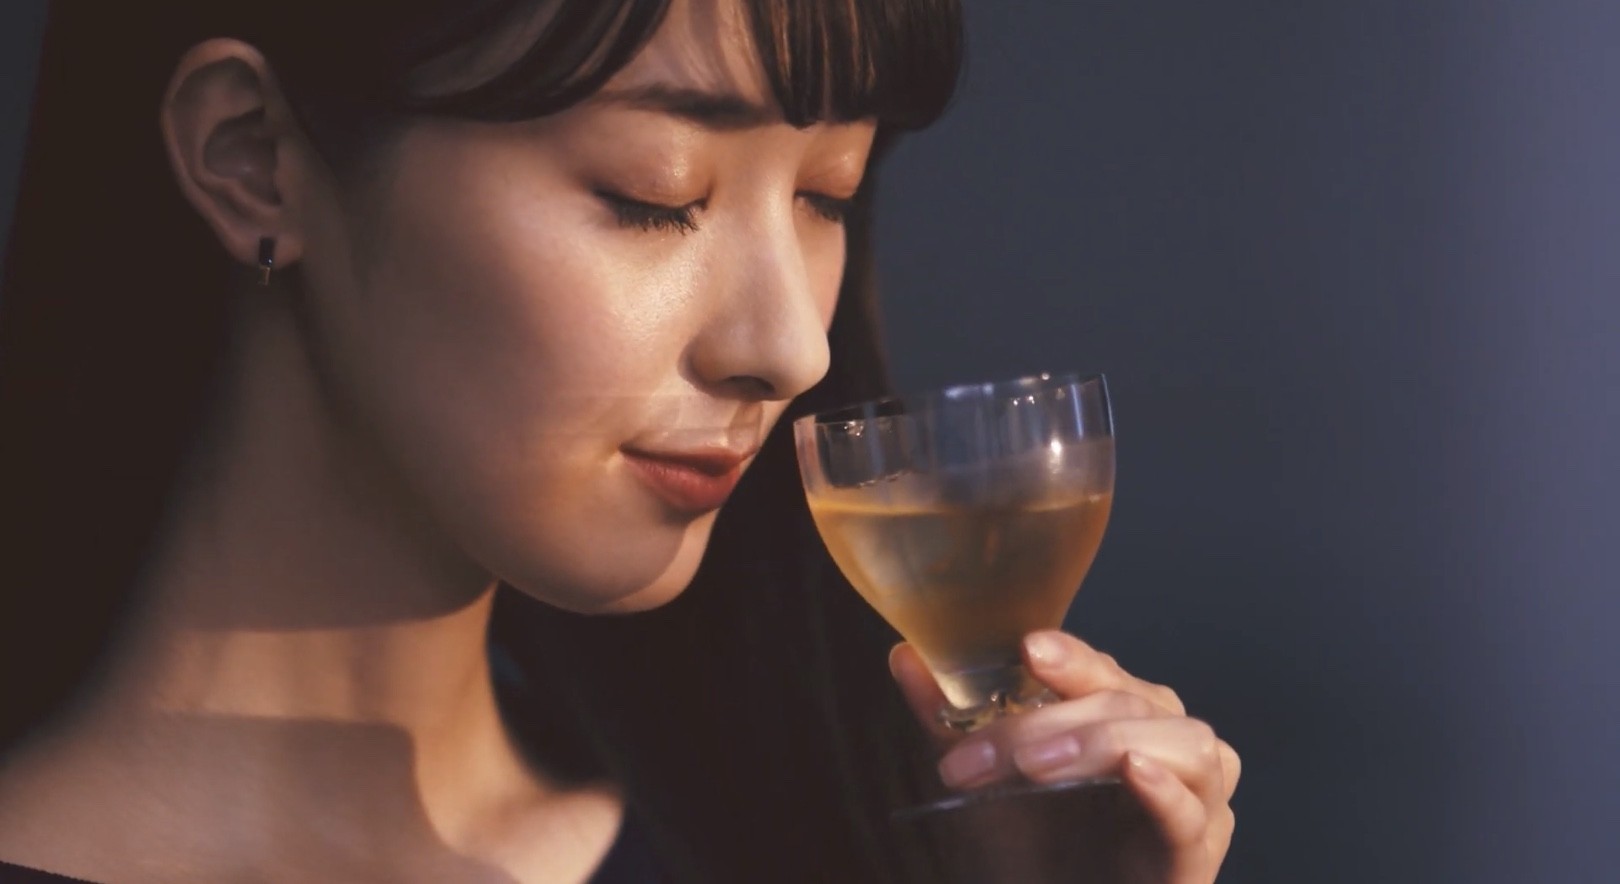 The Choya新cmに出演する女性は宮本茉由 静かに梅酒を楽しむ様子が描かれる